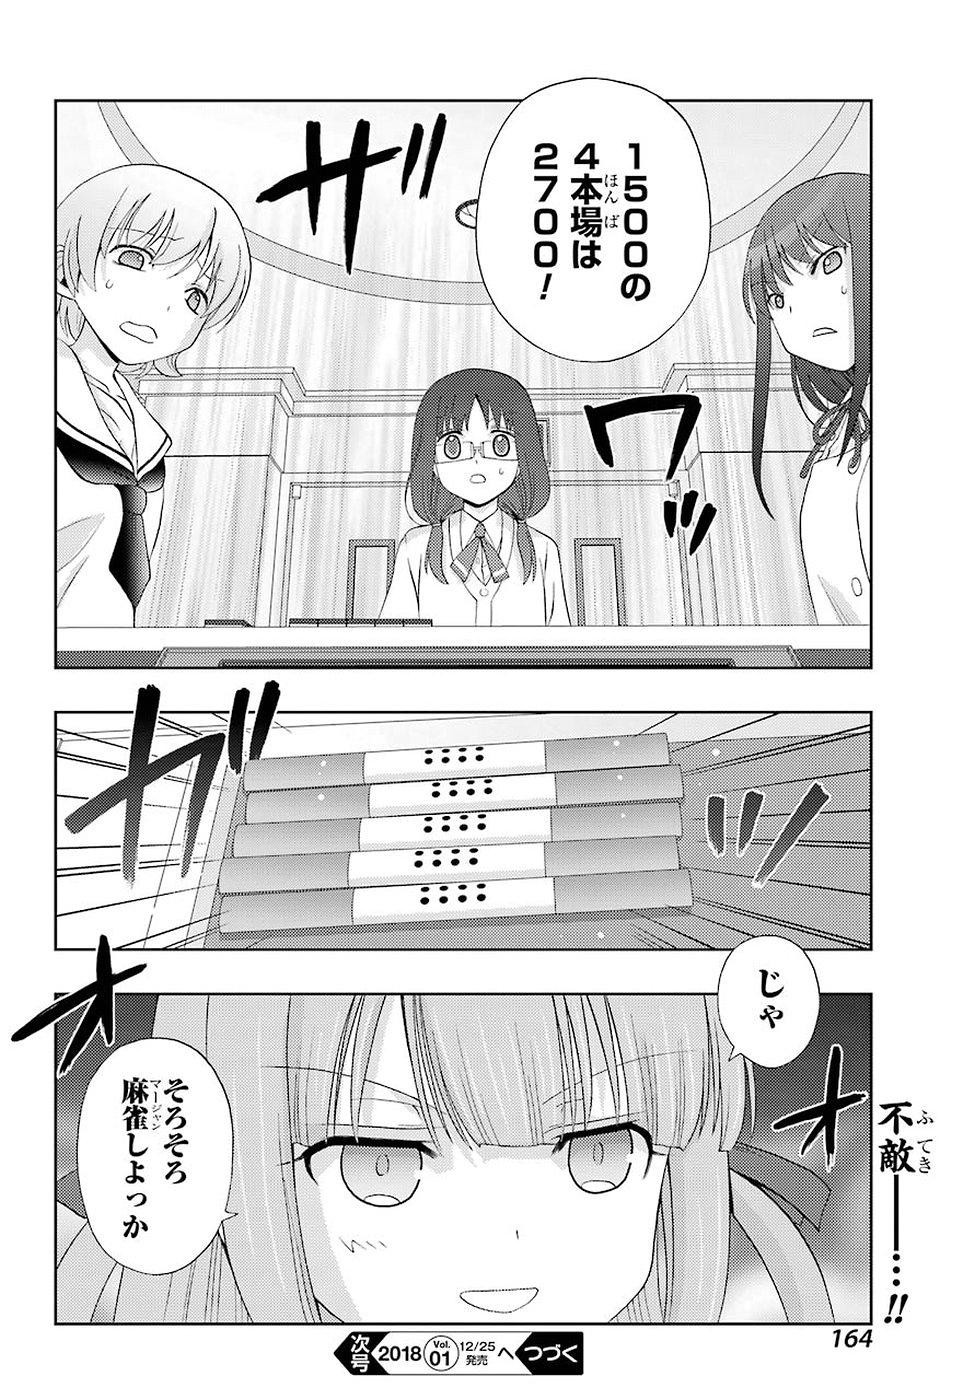 Shinohayu - The Dawn of Age Manga - Chapter 051 - Page 27